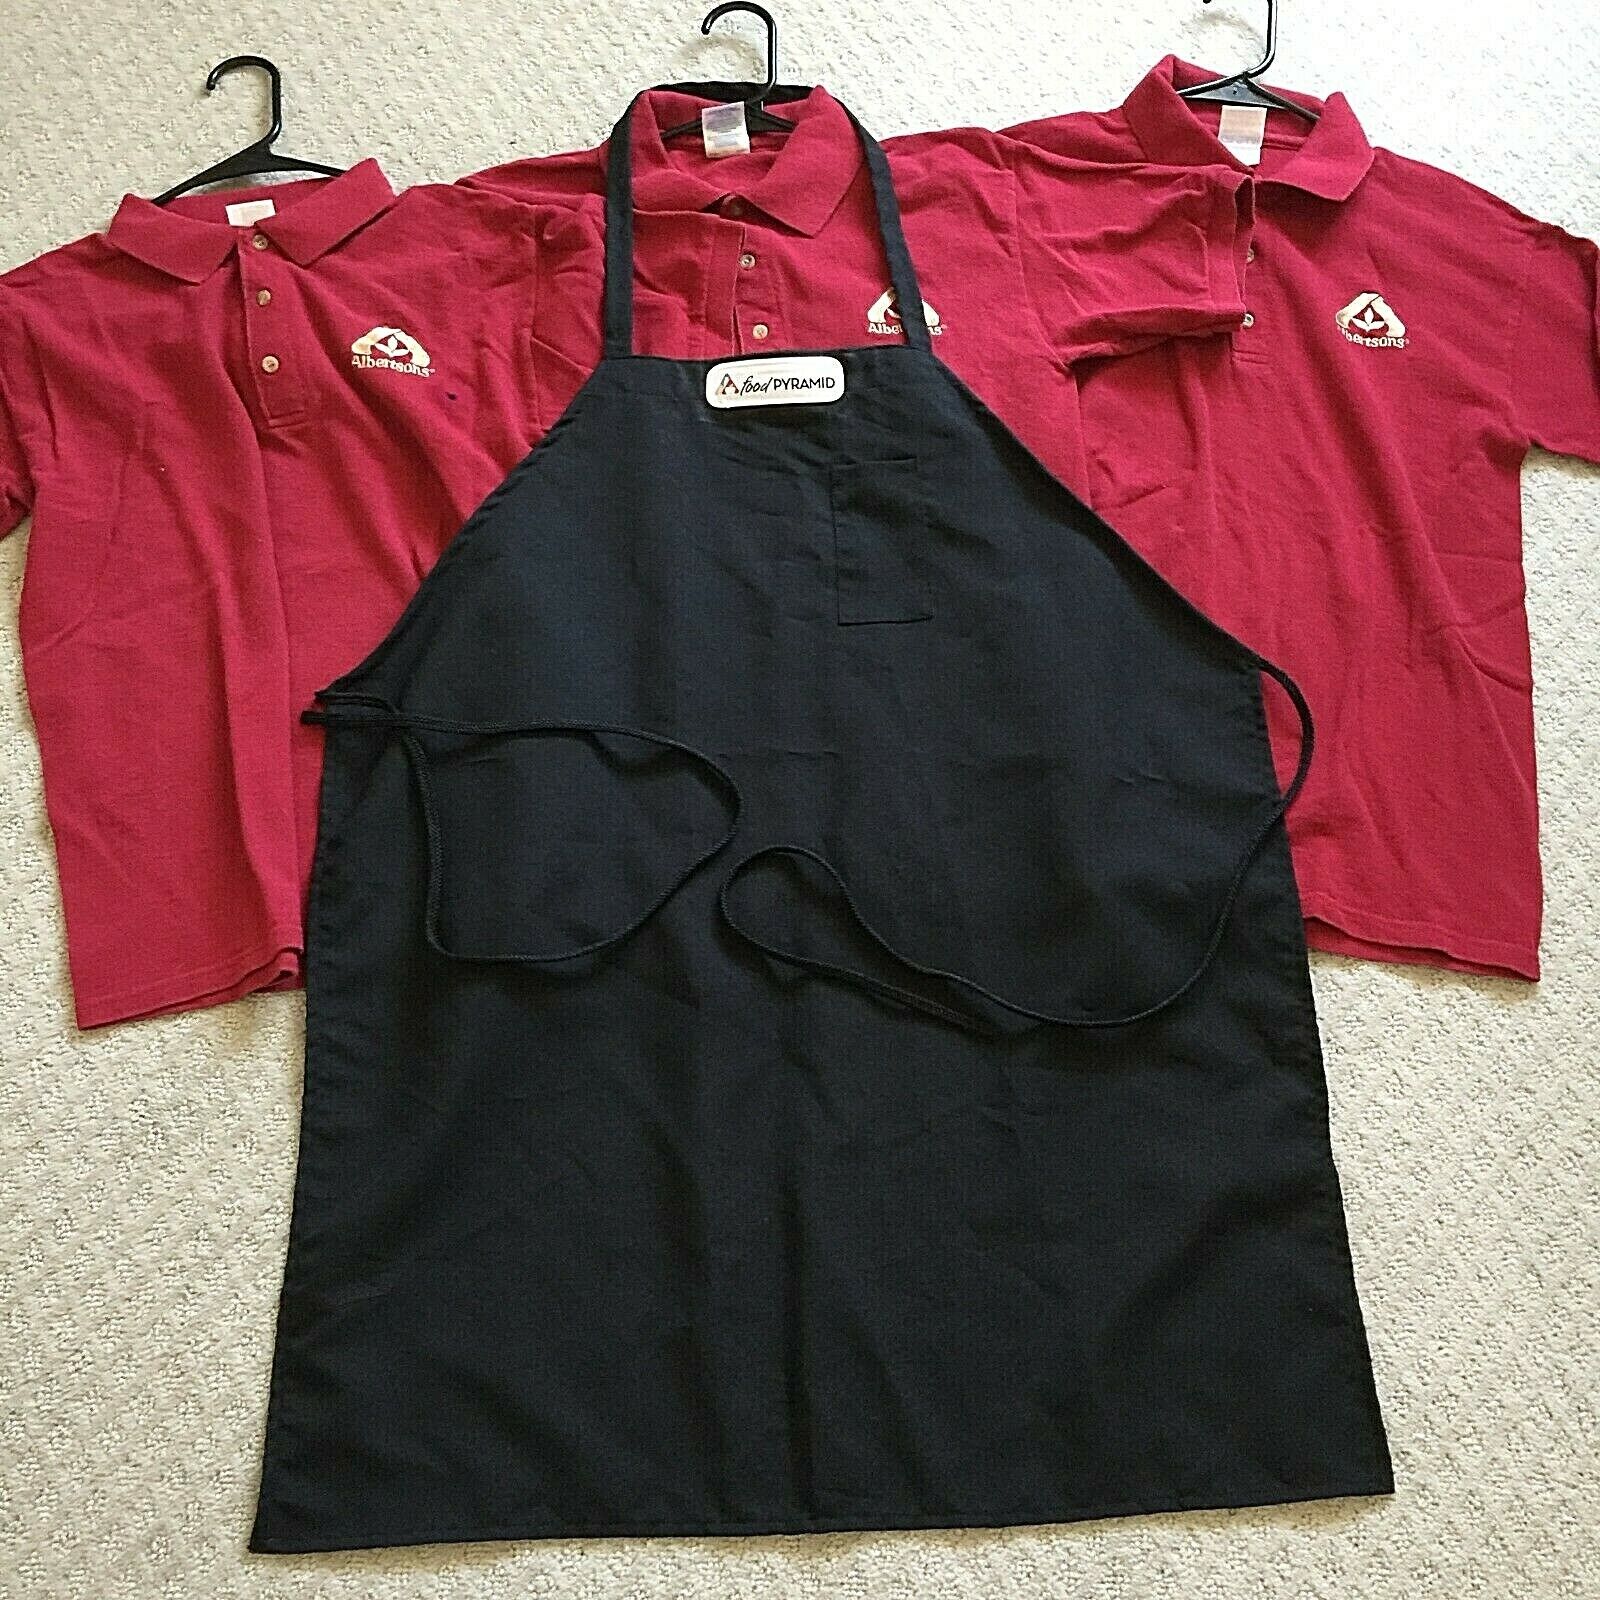 Vintage Albertsons Food Pyramid Grocery Employee Uniform Polo Shirts and Apron Gildan